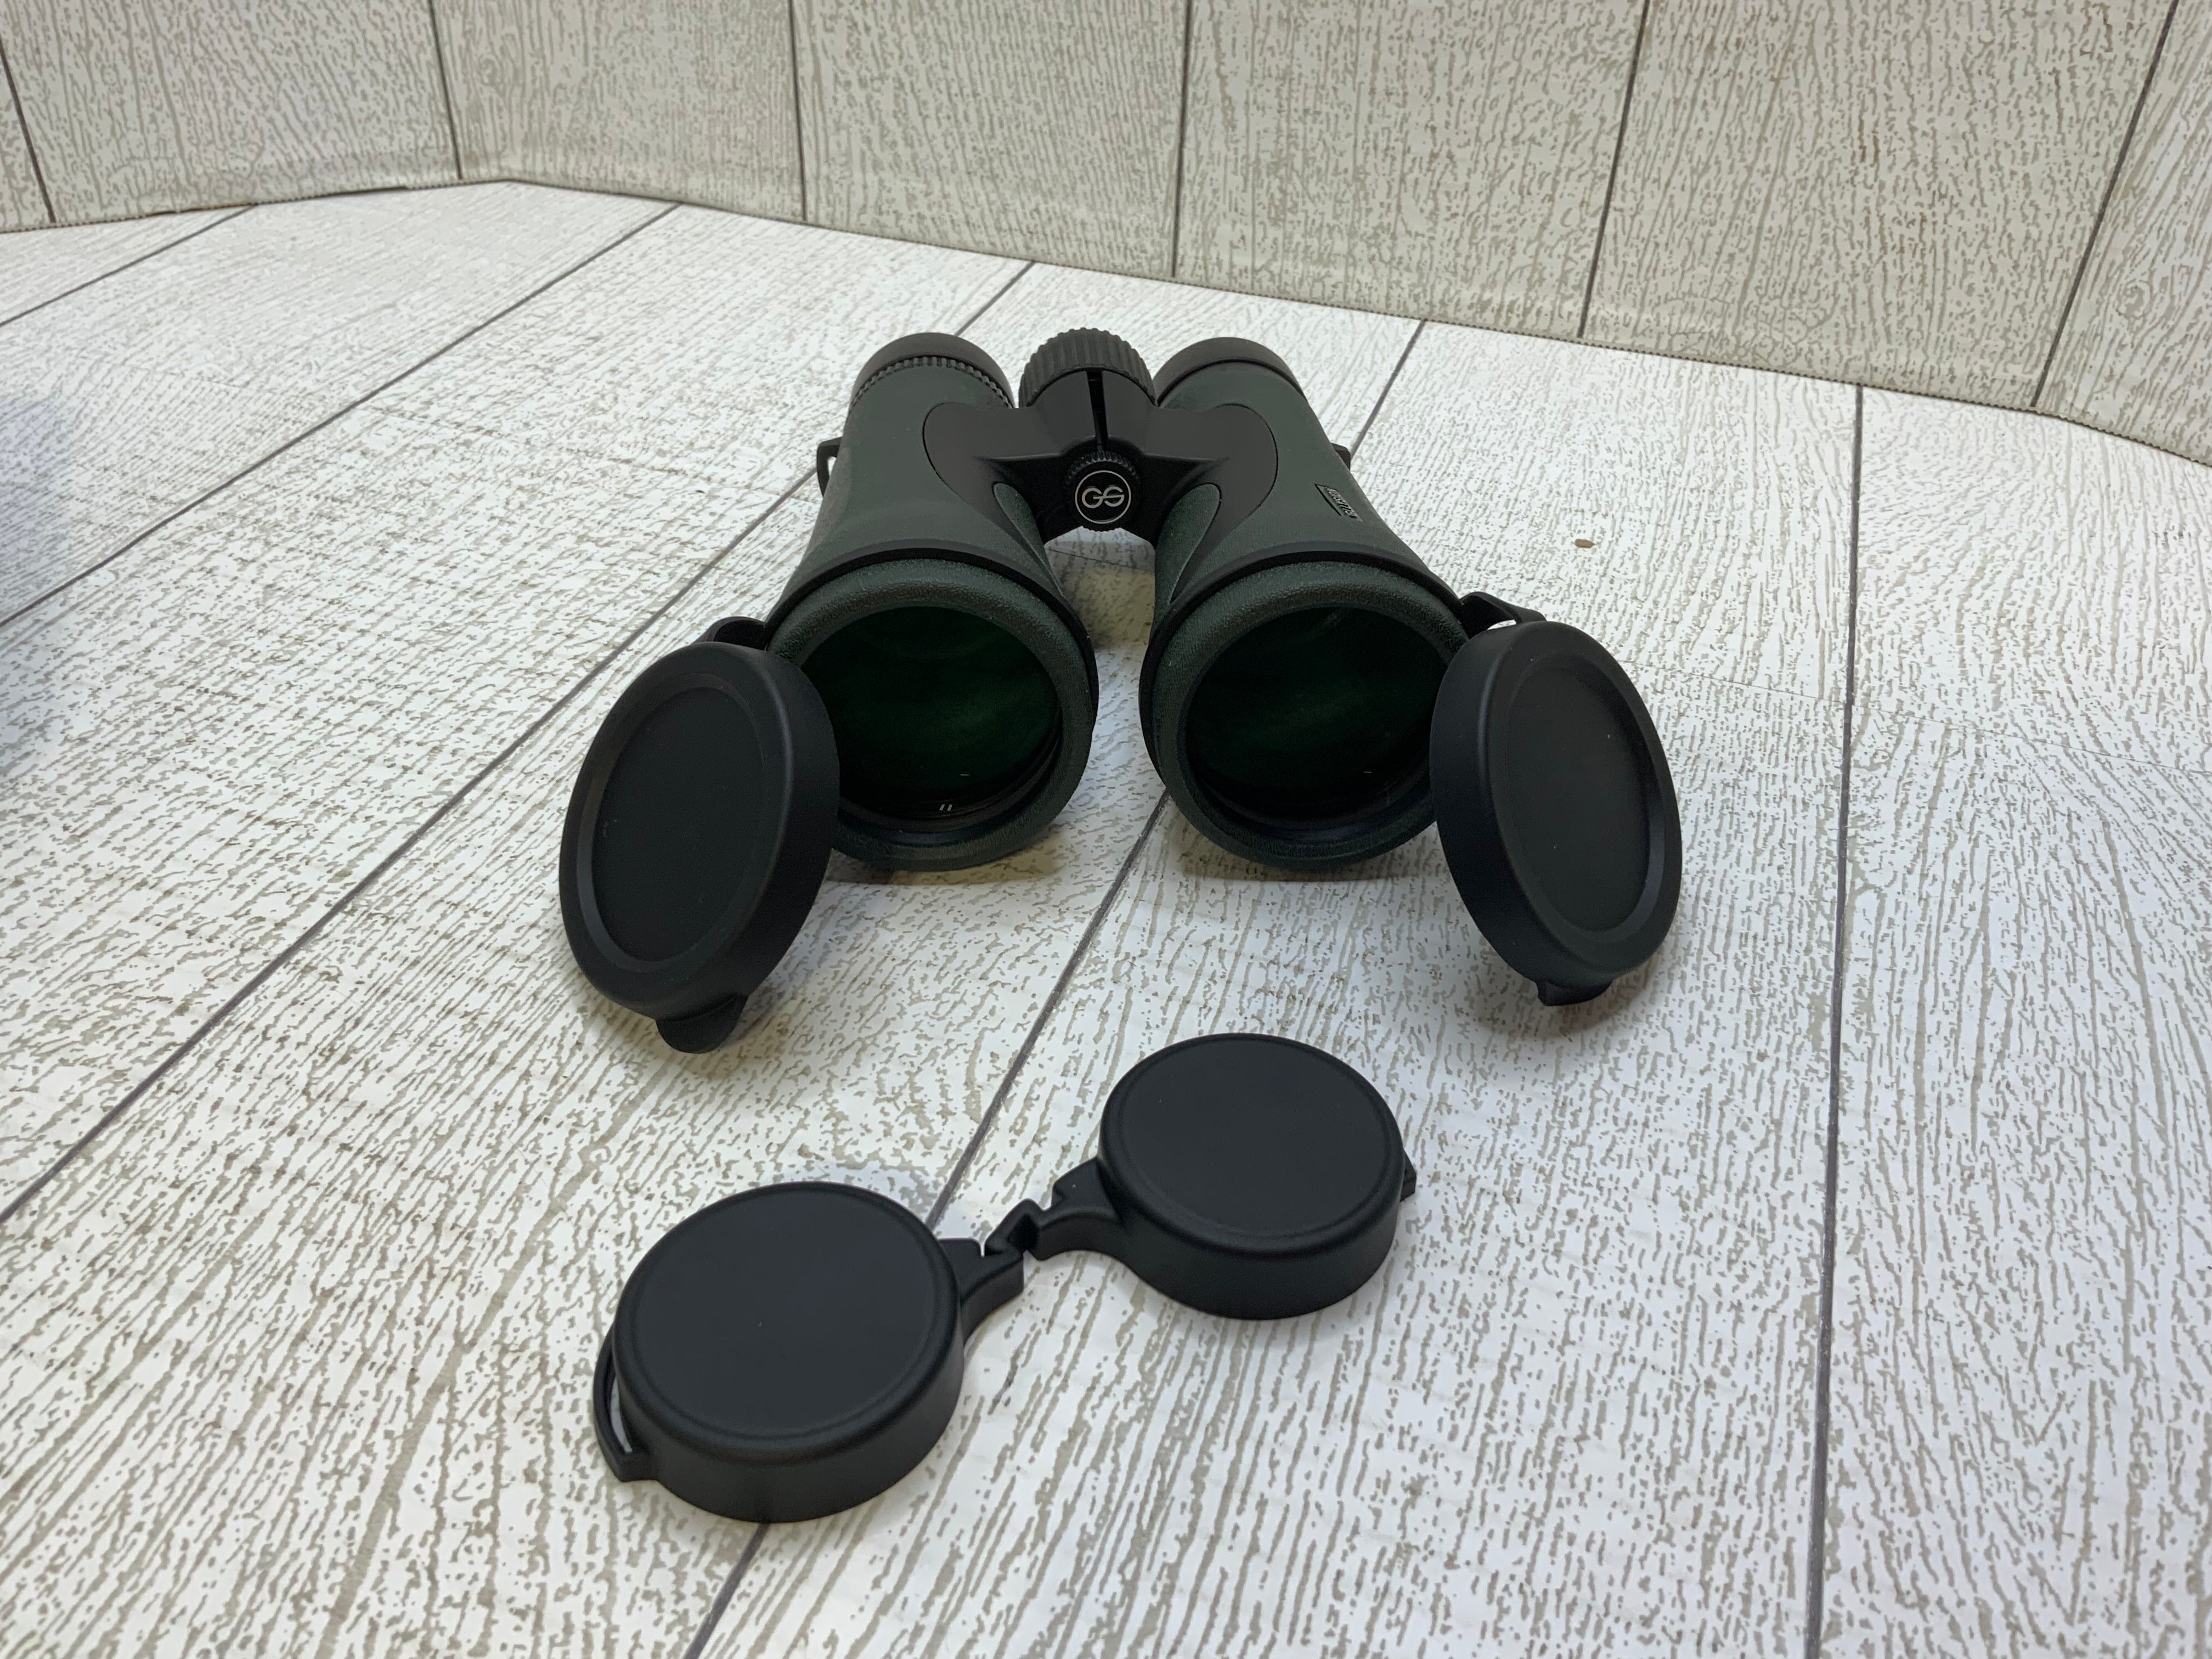 GLLYSION--12X50 Professional HD Binoculars for Adults & Birdwatching (7944593801454)